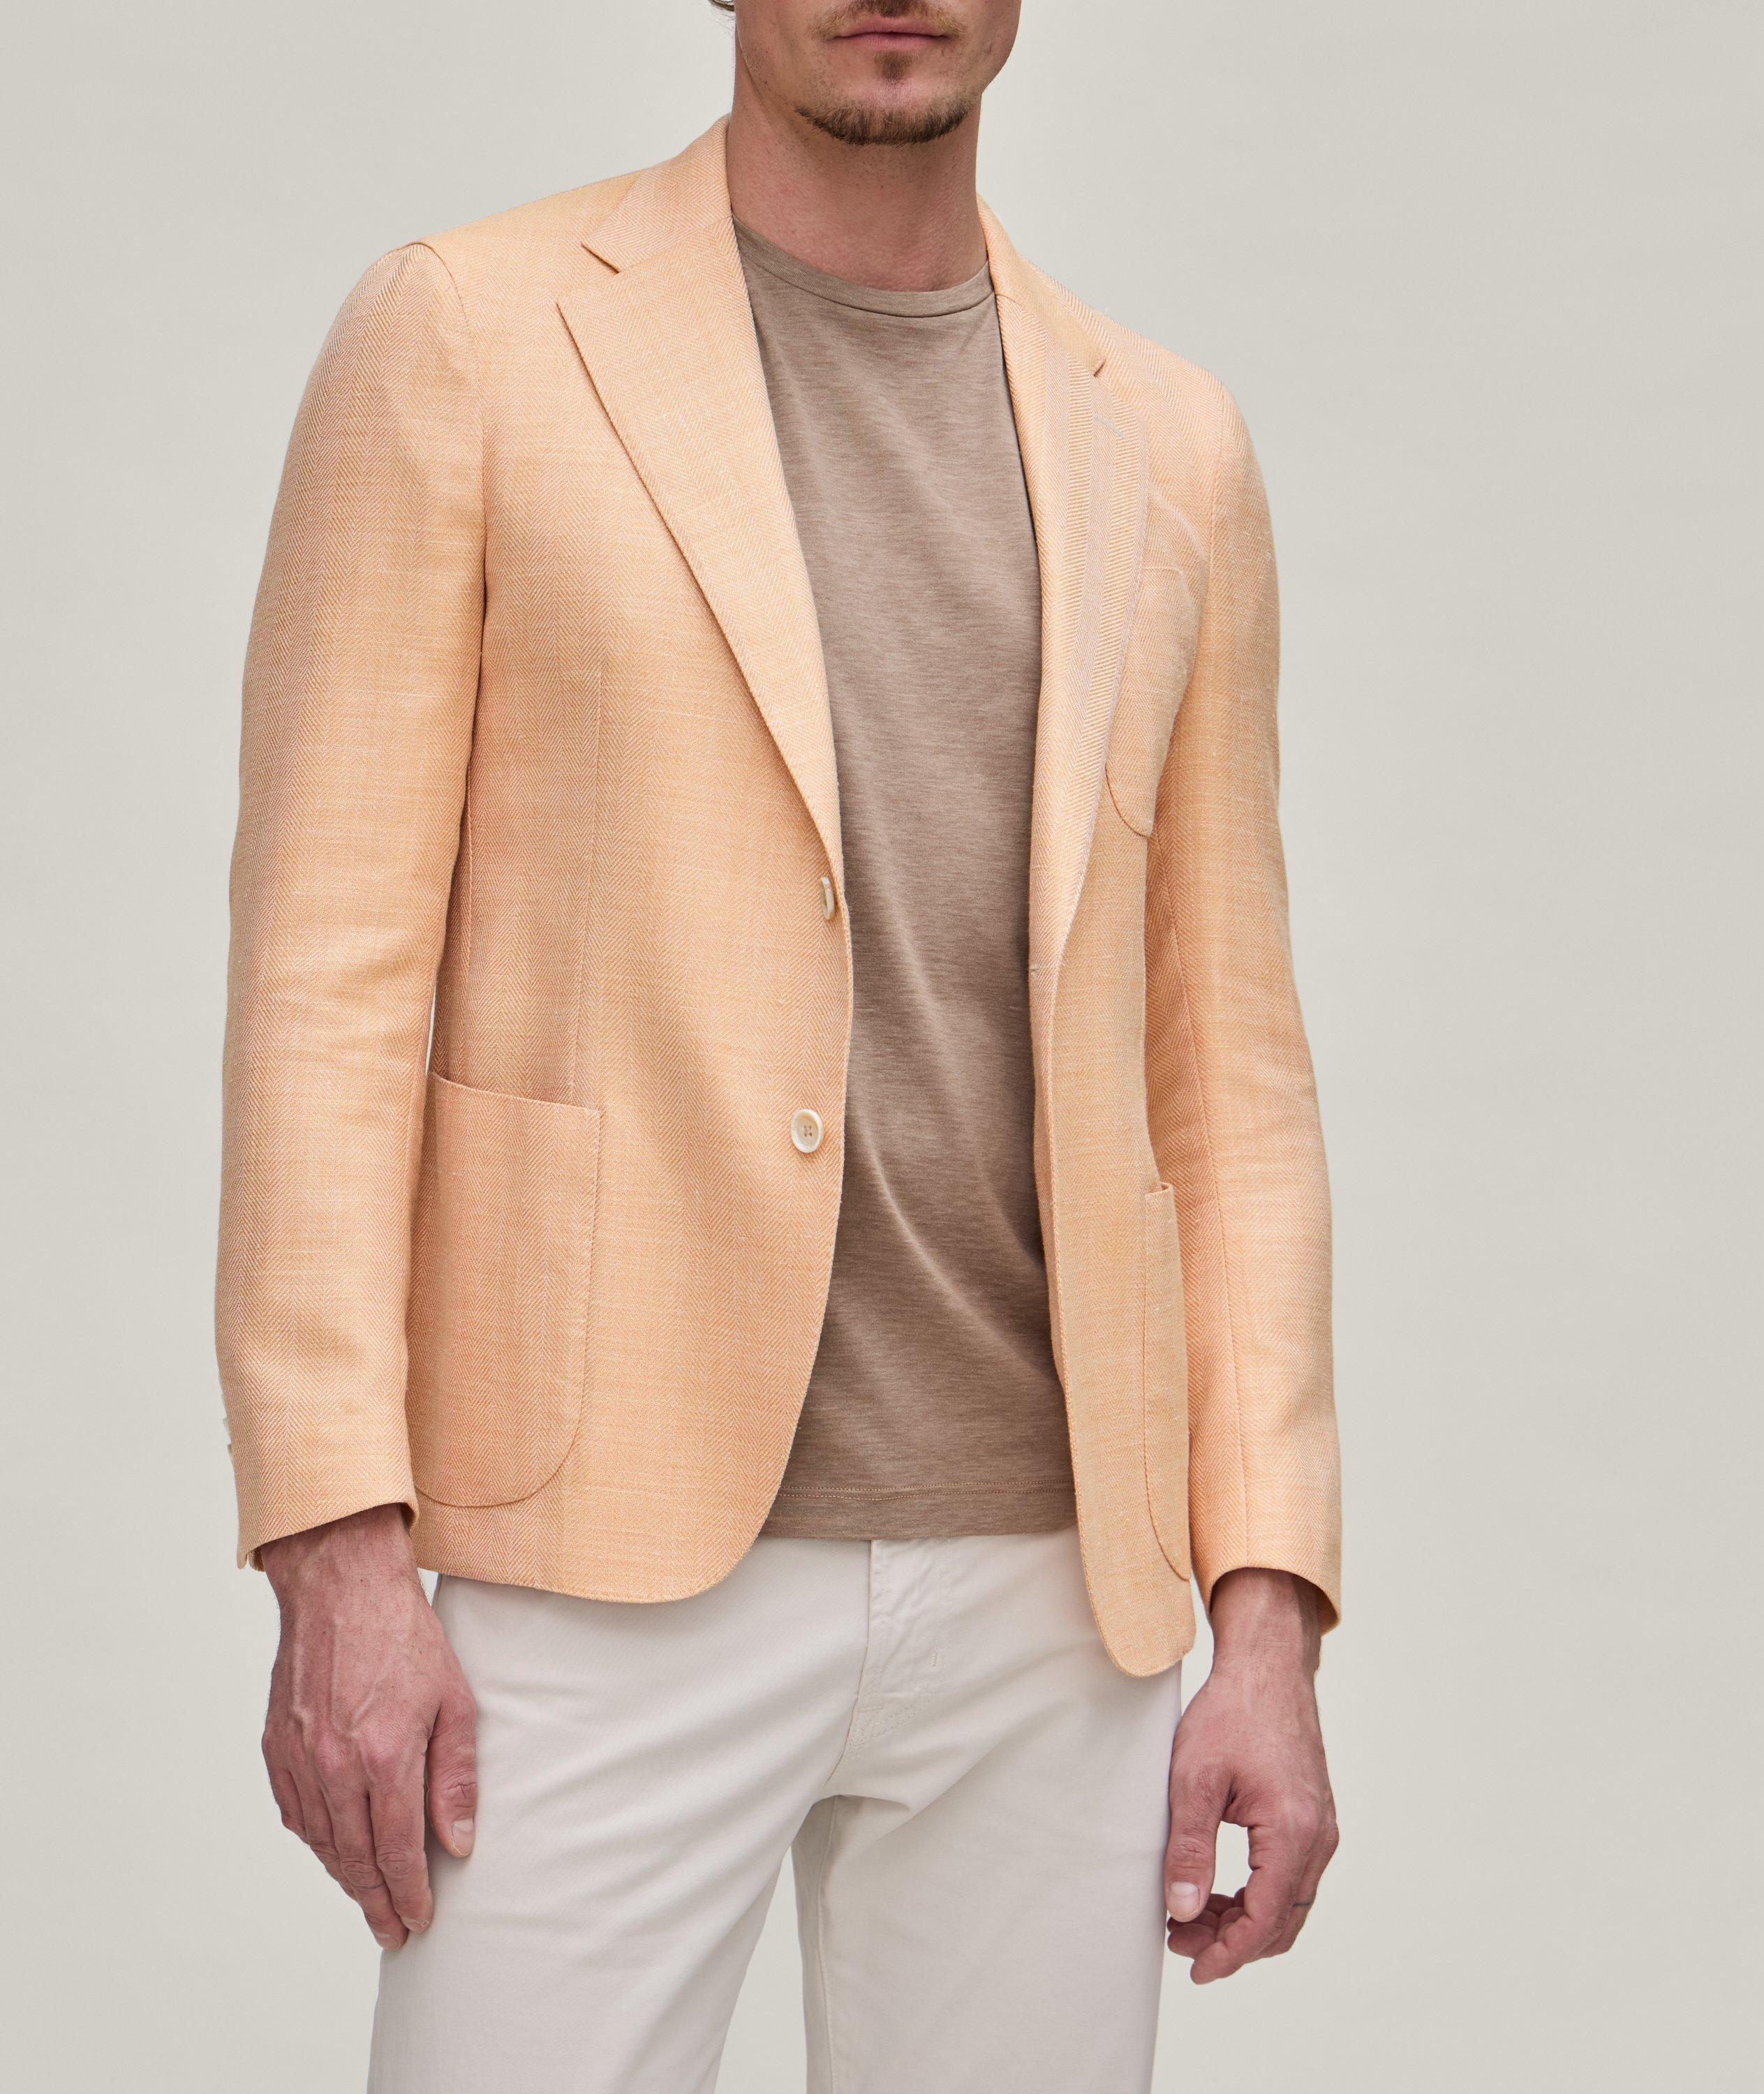 Tonal Herringbone Wool, Silk & Linen Sport Jacket image 1